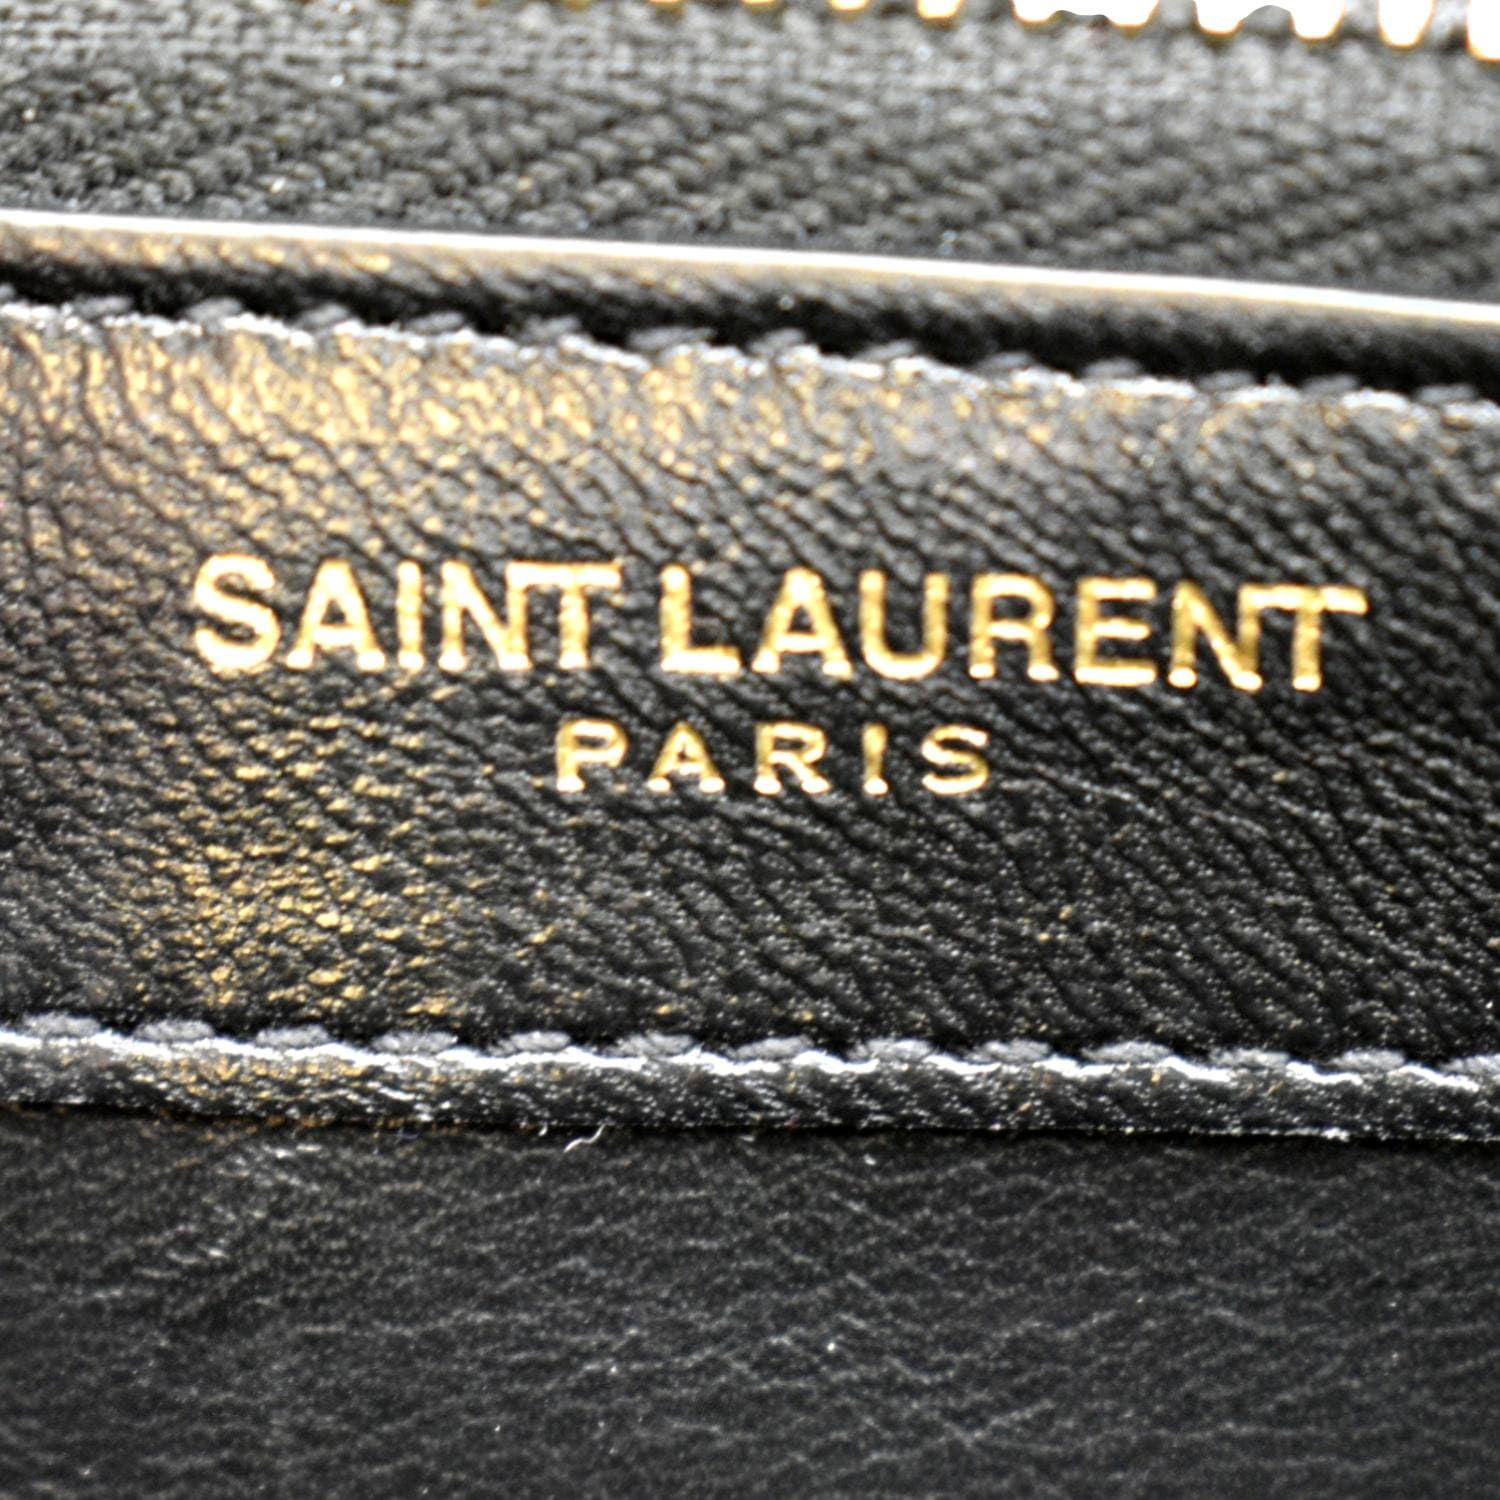 Real vs Fake YSL handbag. How to spot fake Yves Saint Laurent